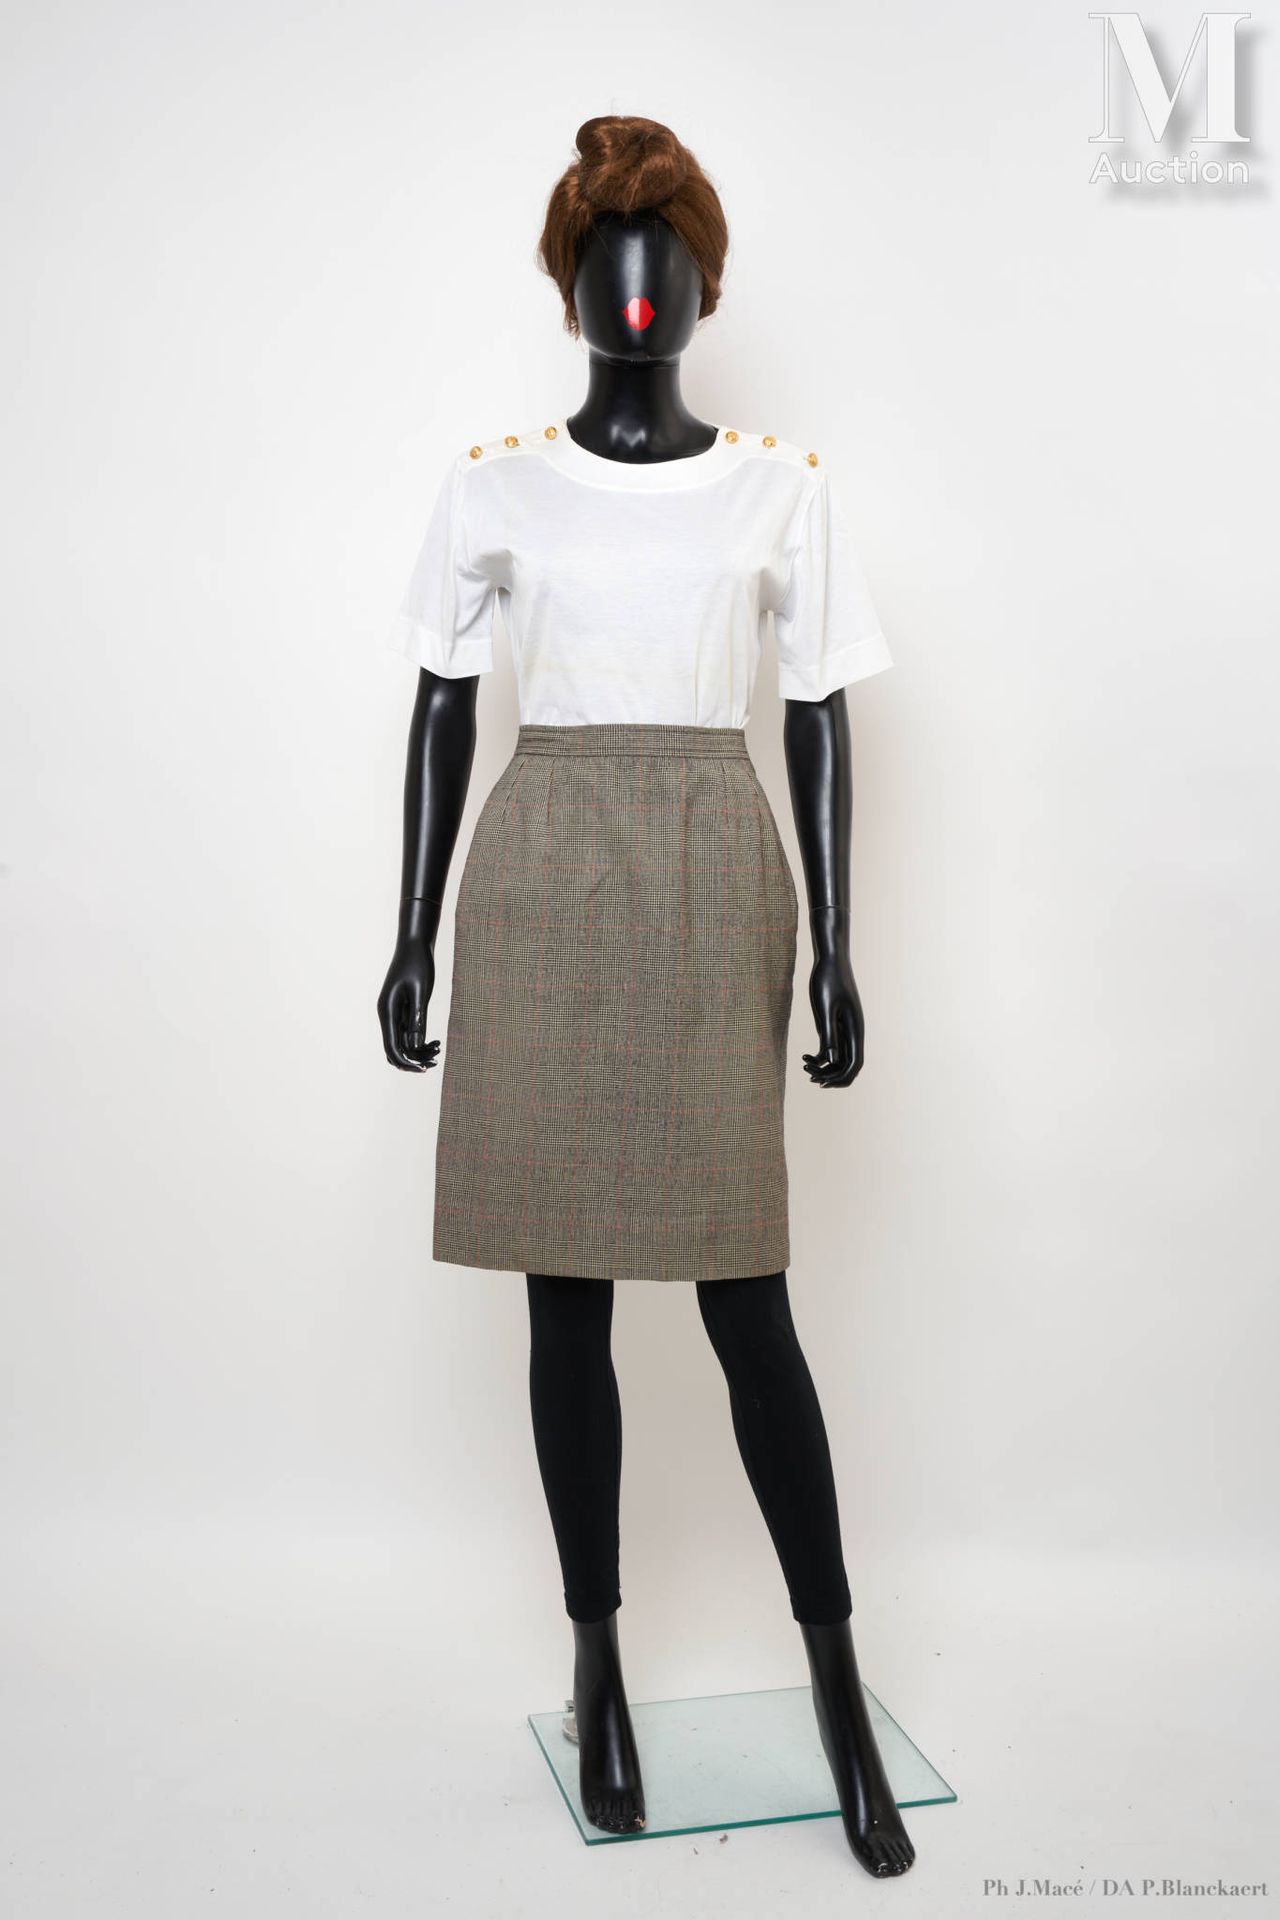 YVES SAINT LAURENT RIVE GAUCHE - 1990's 裙装
象牙色羊毛配黑色和红色方块
T.38 (=约T. XS/S)